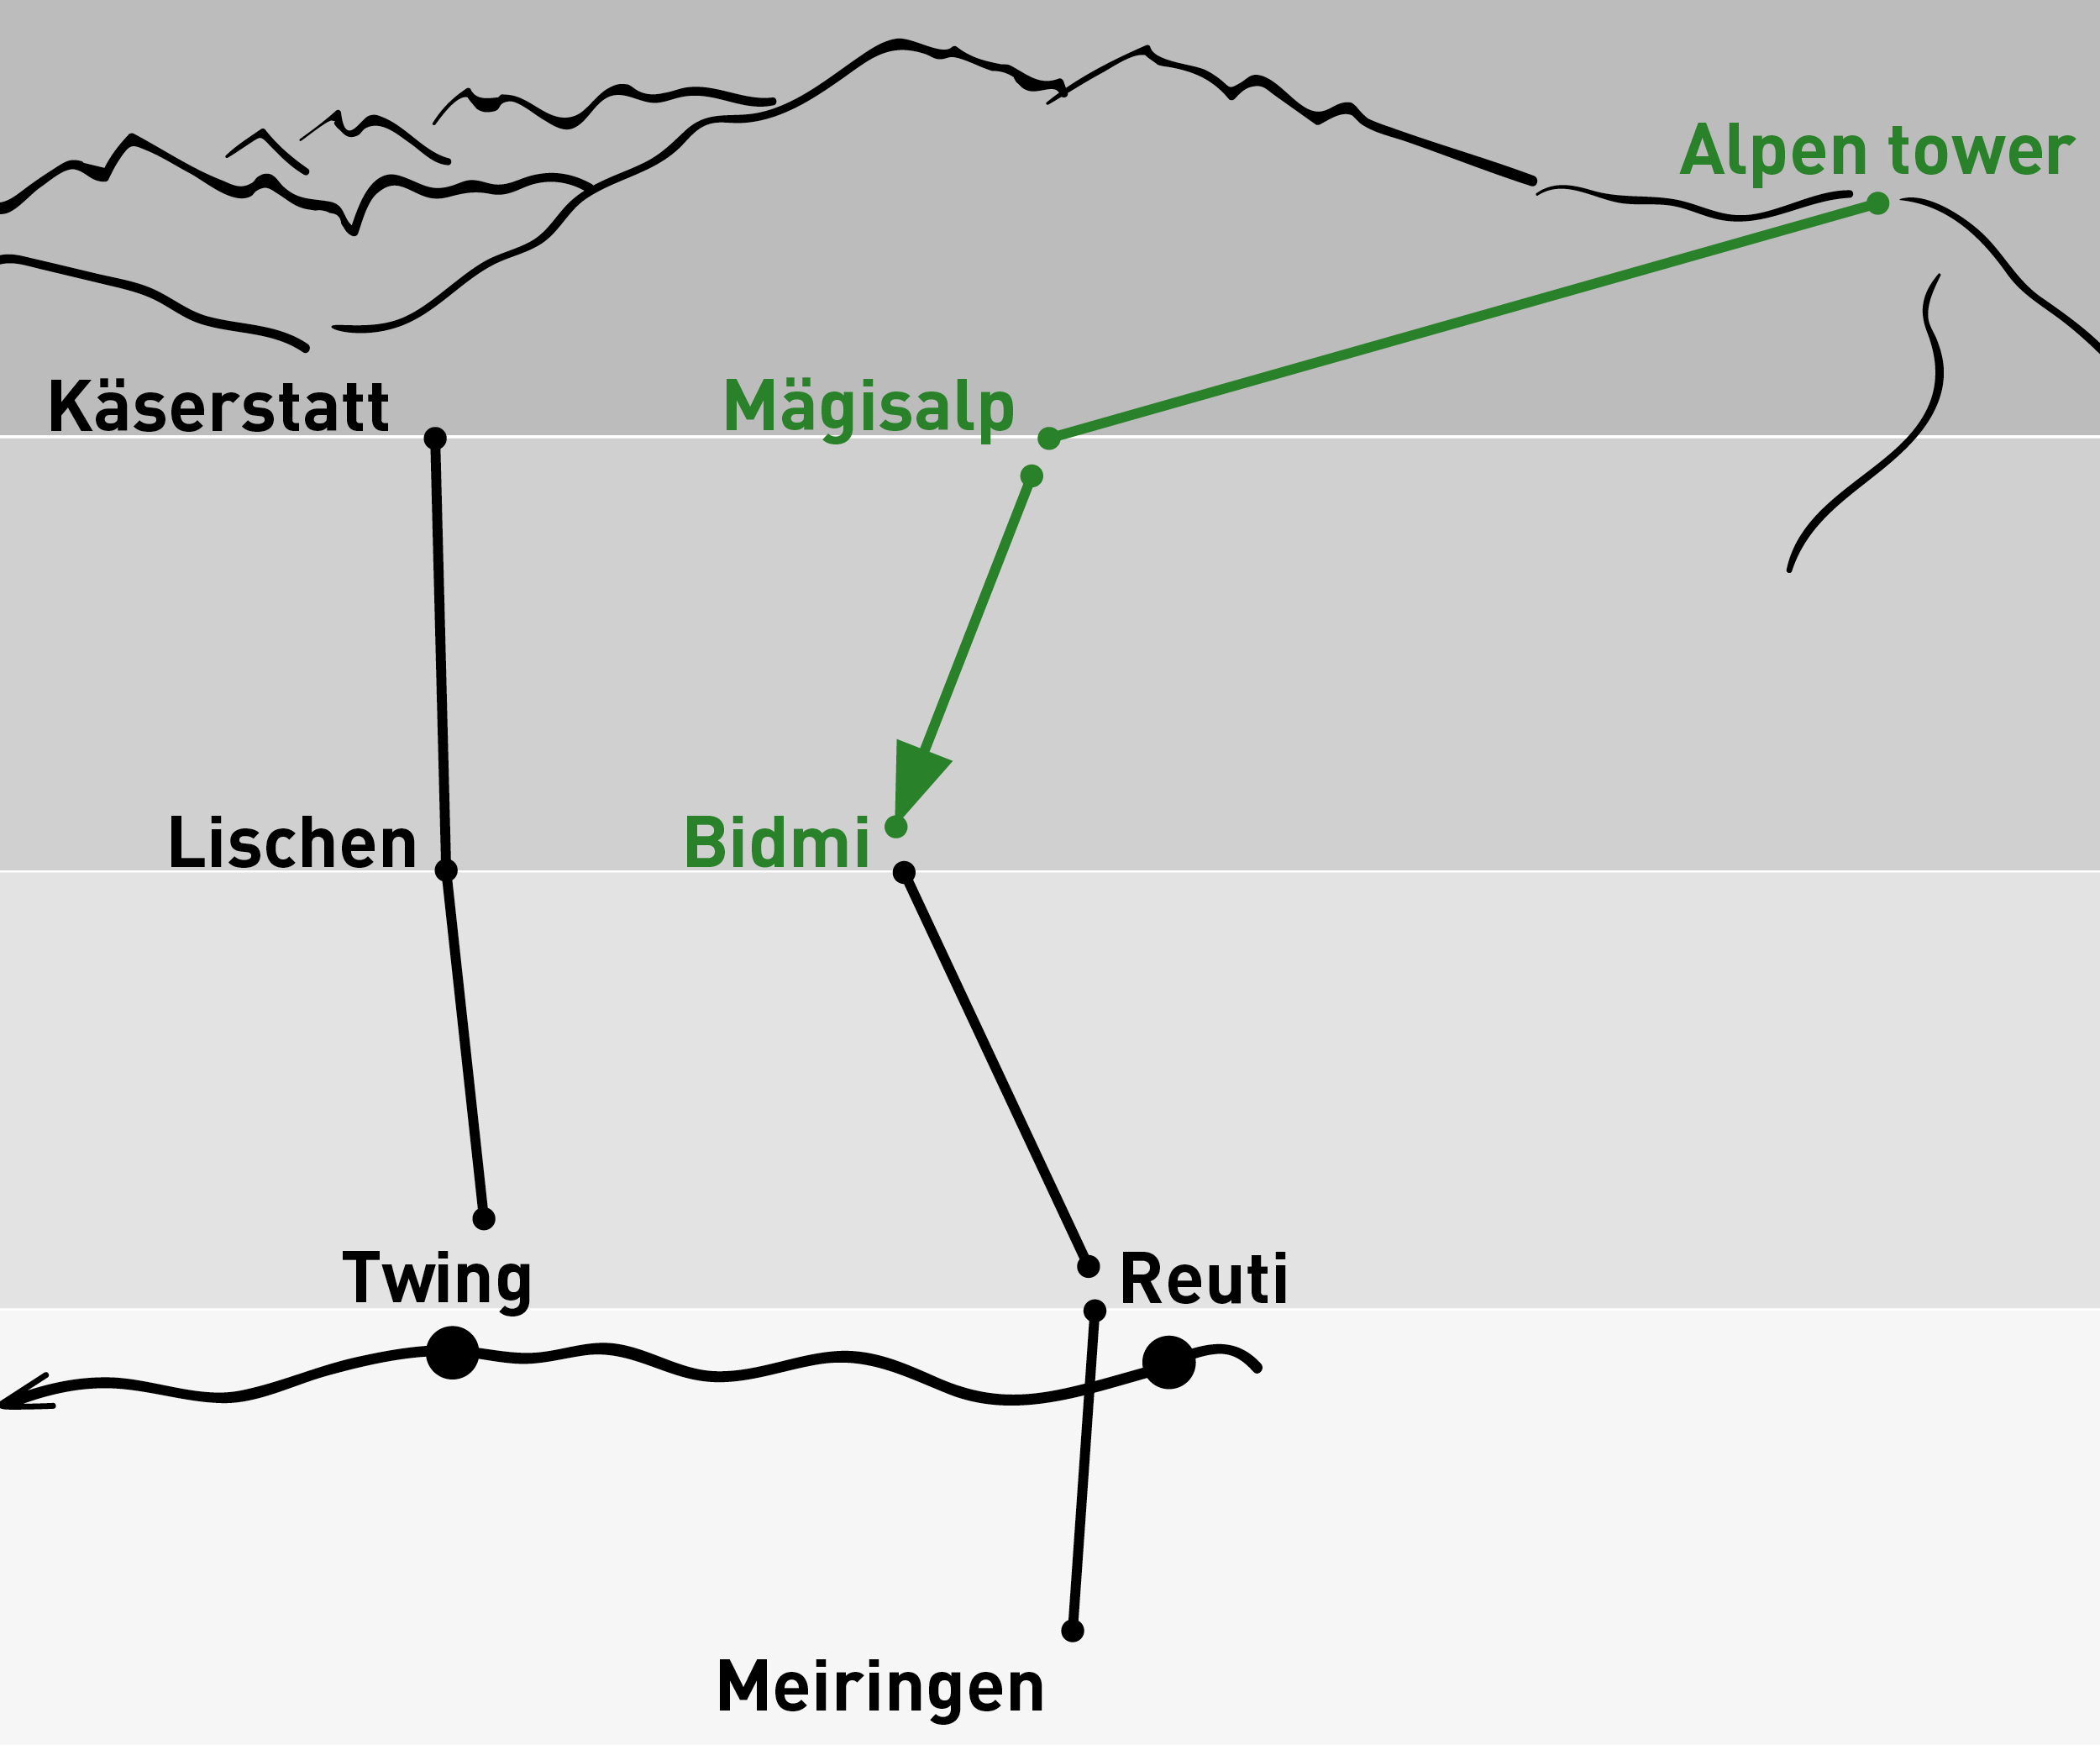 Alpen tower - Bidmi | One-way trip